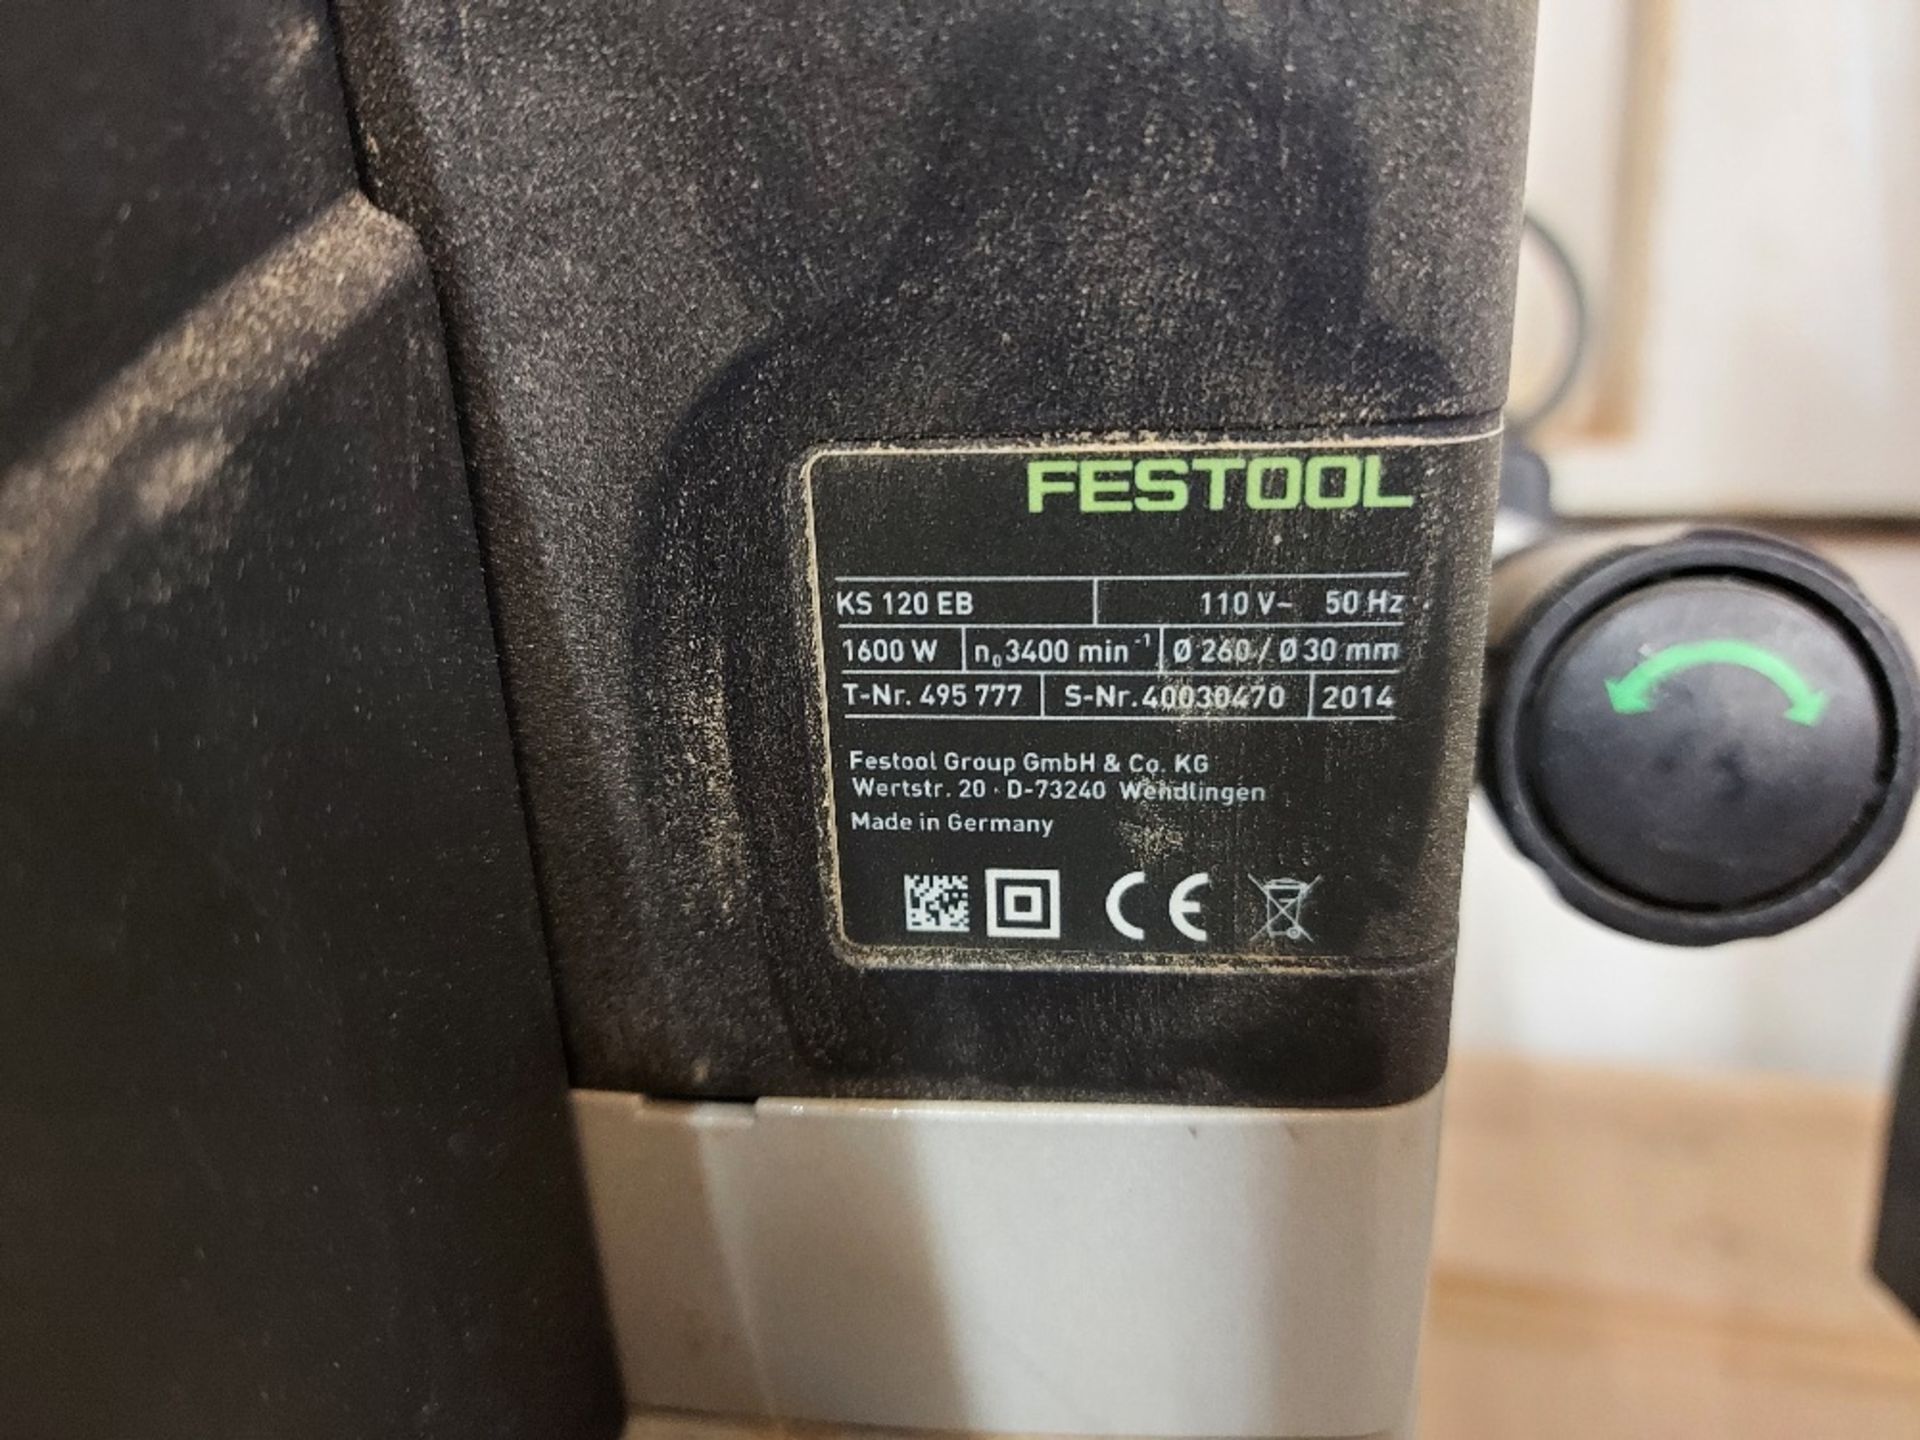 Festool Kapex KS 120 EB 260mm Compound Mitre Saw - Image 4 of 5